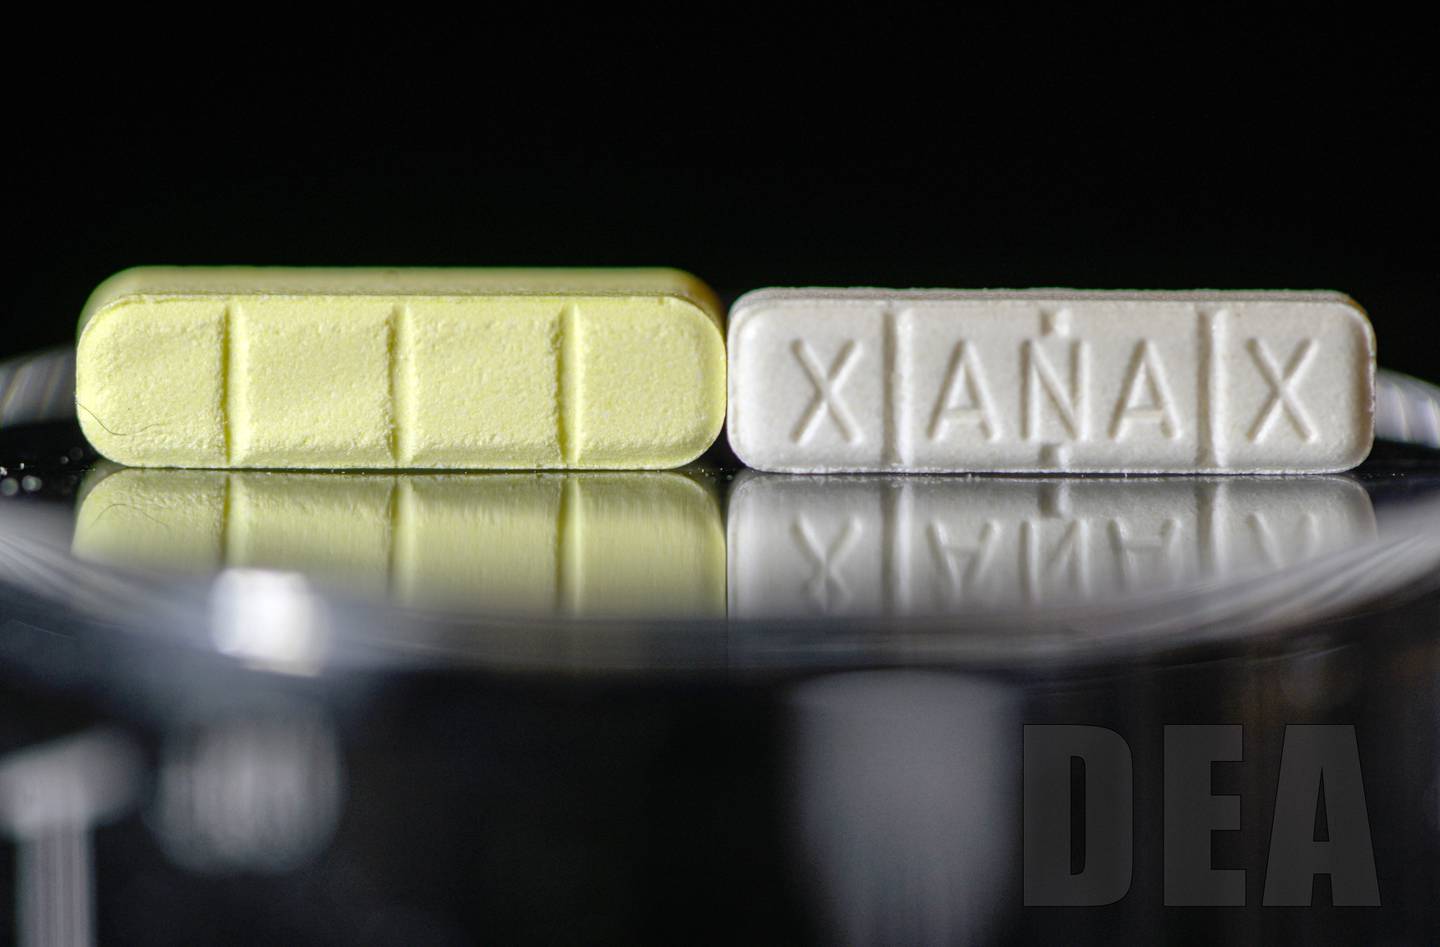 DEA Pills